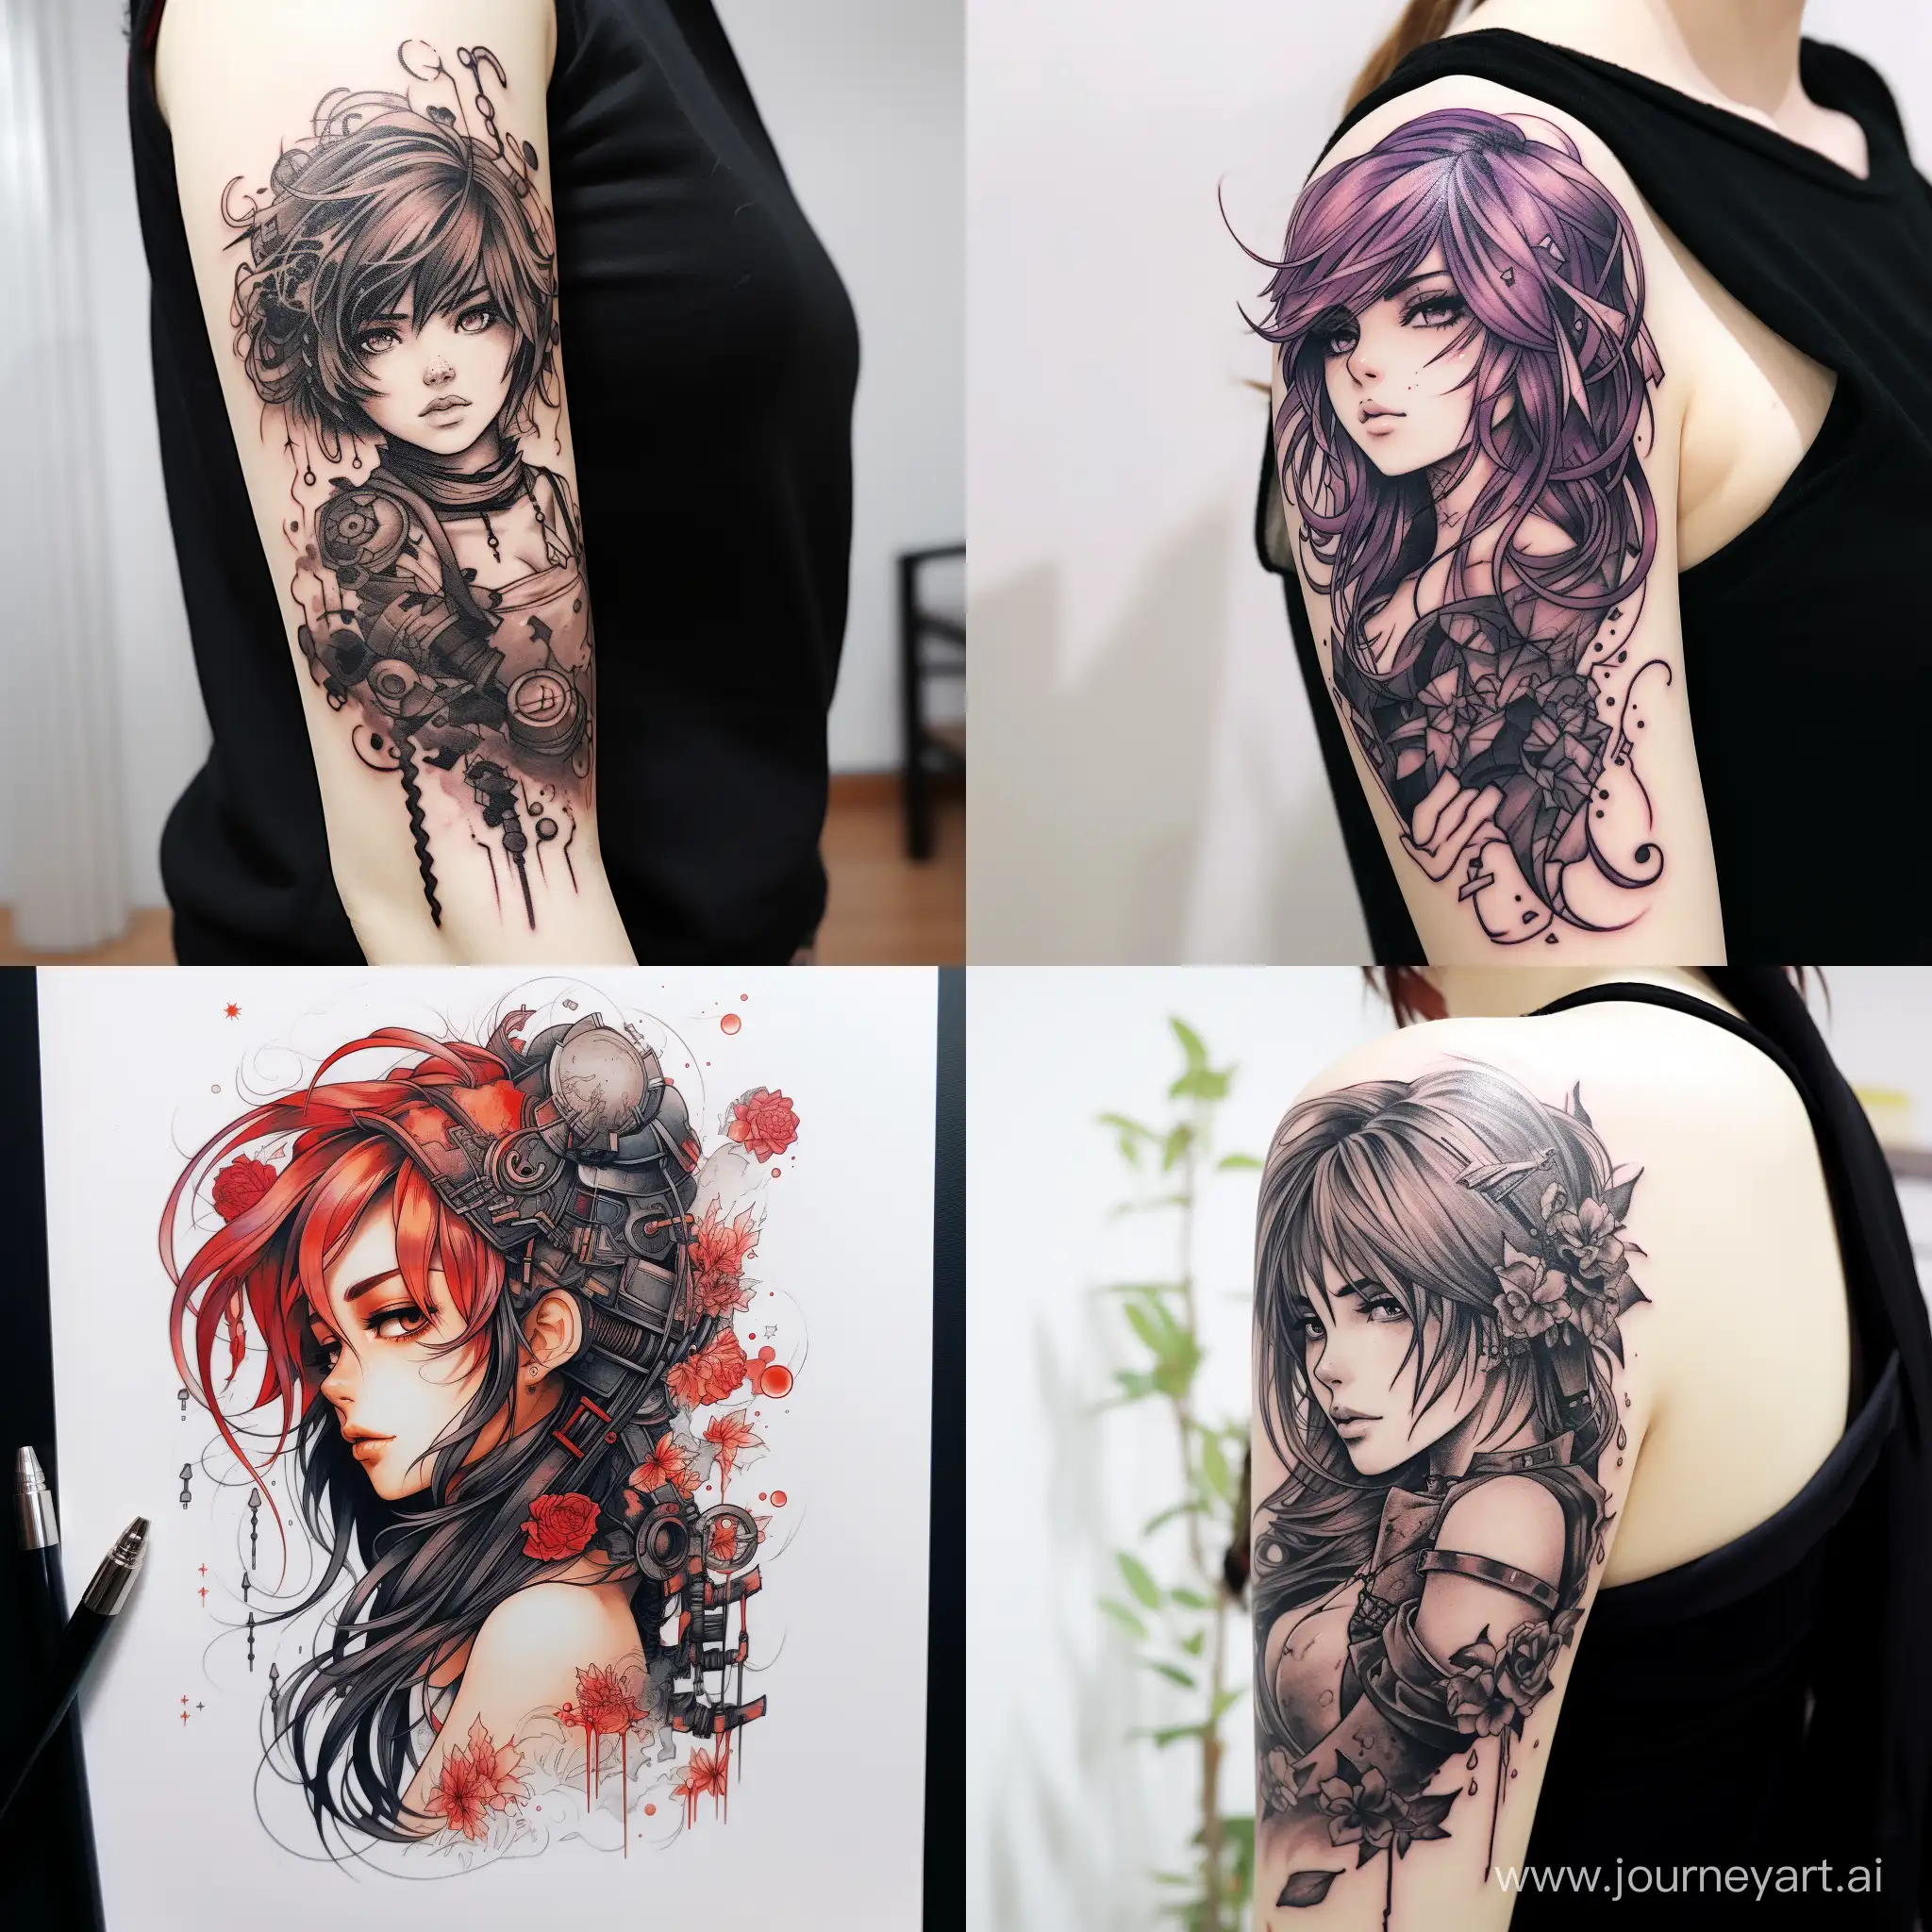 Vibrant-Anime-Manga-Tattoo-Design-with-Intricate-Details